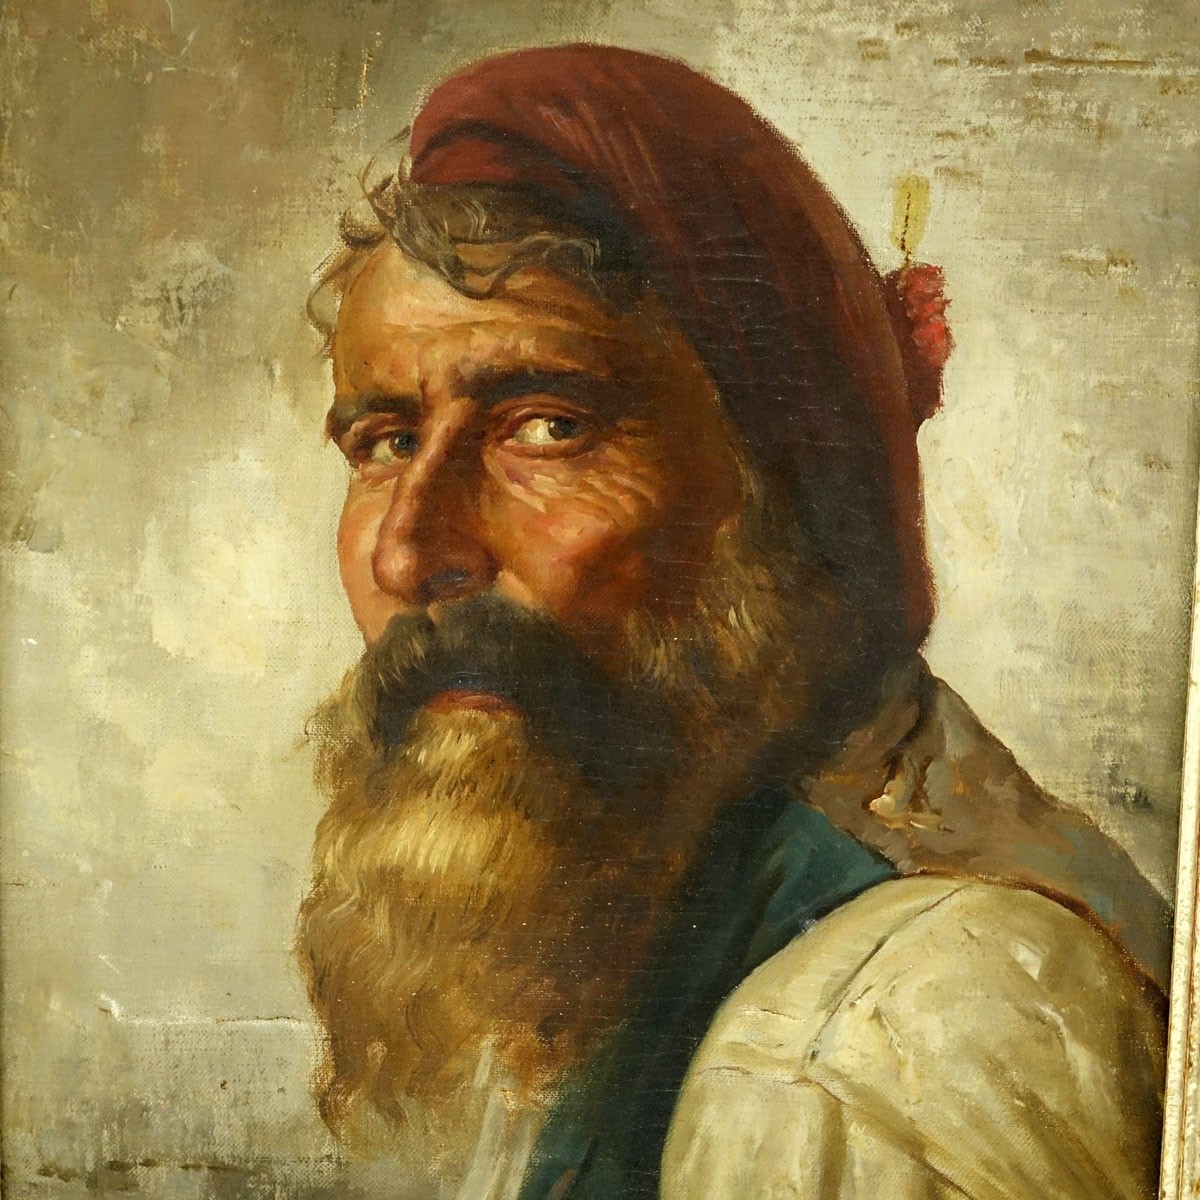 Raffaele Frigerio, Italian (1875 - 1948) Oil on canvas "Portrait Of A Fisherman". Signed lower right.